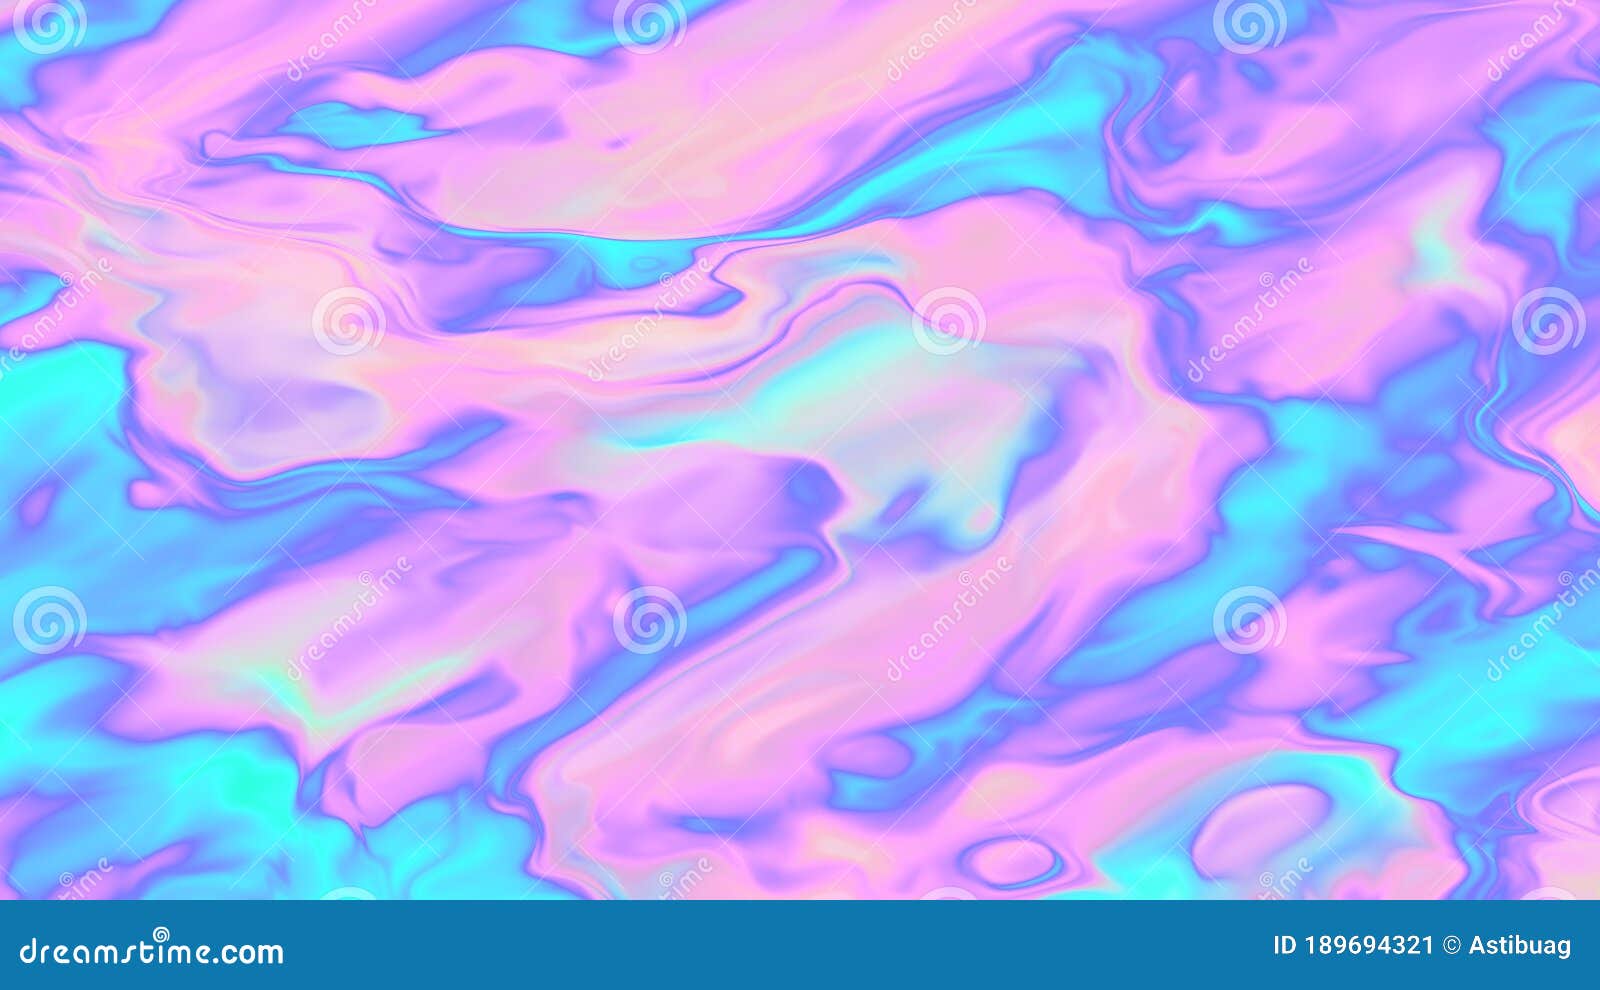 iridescent psychedelic background. crazy liquid texture. fluid rainbow pattern. acid holographic effect